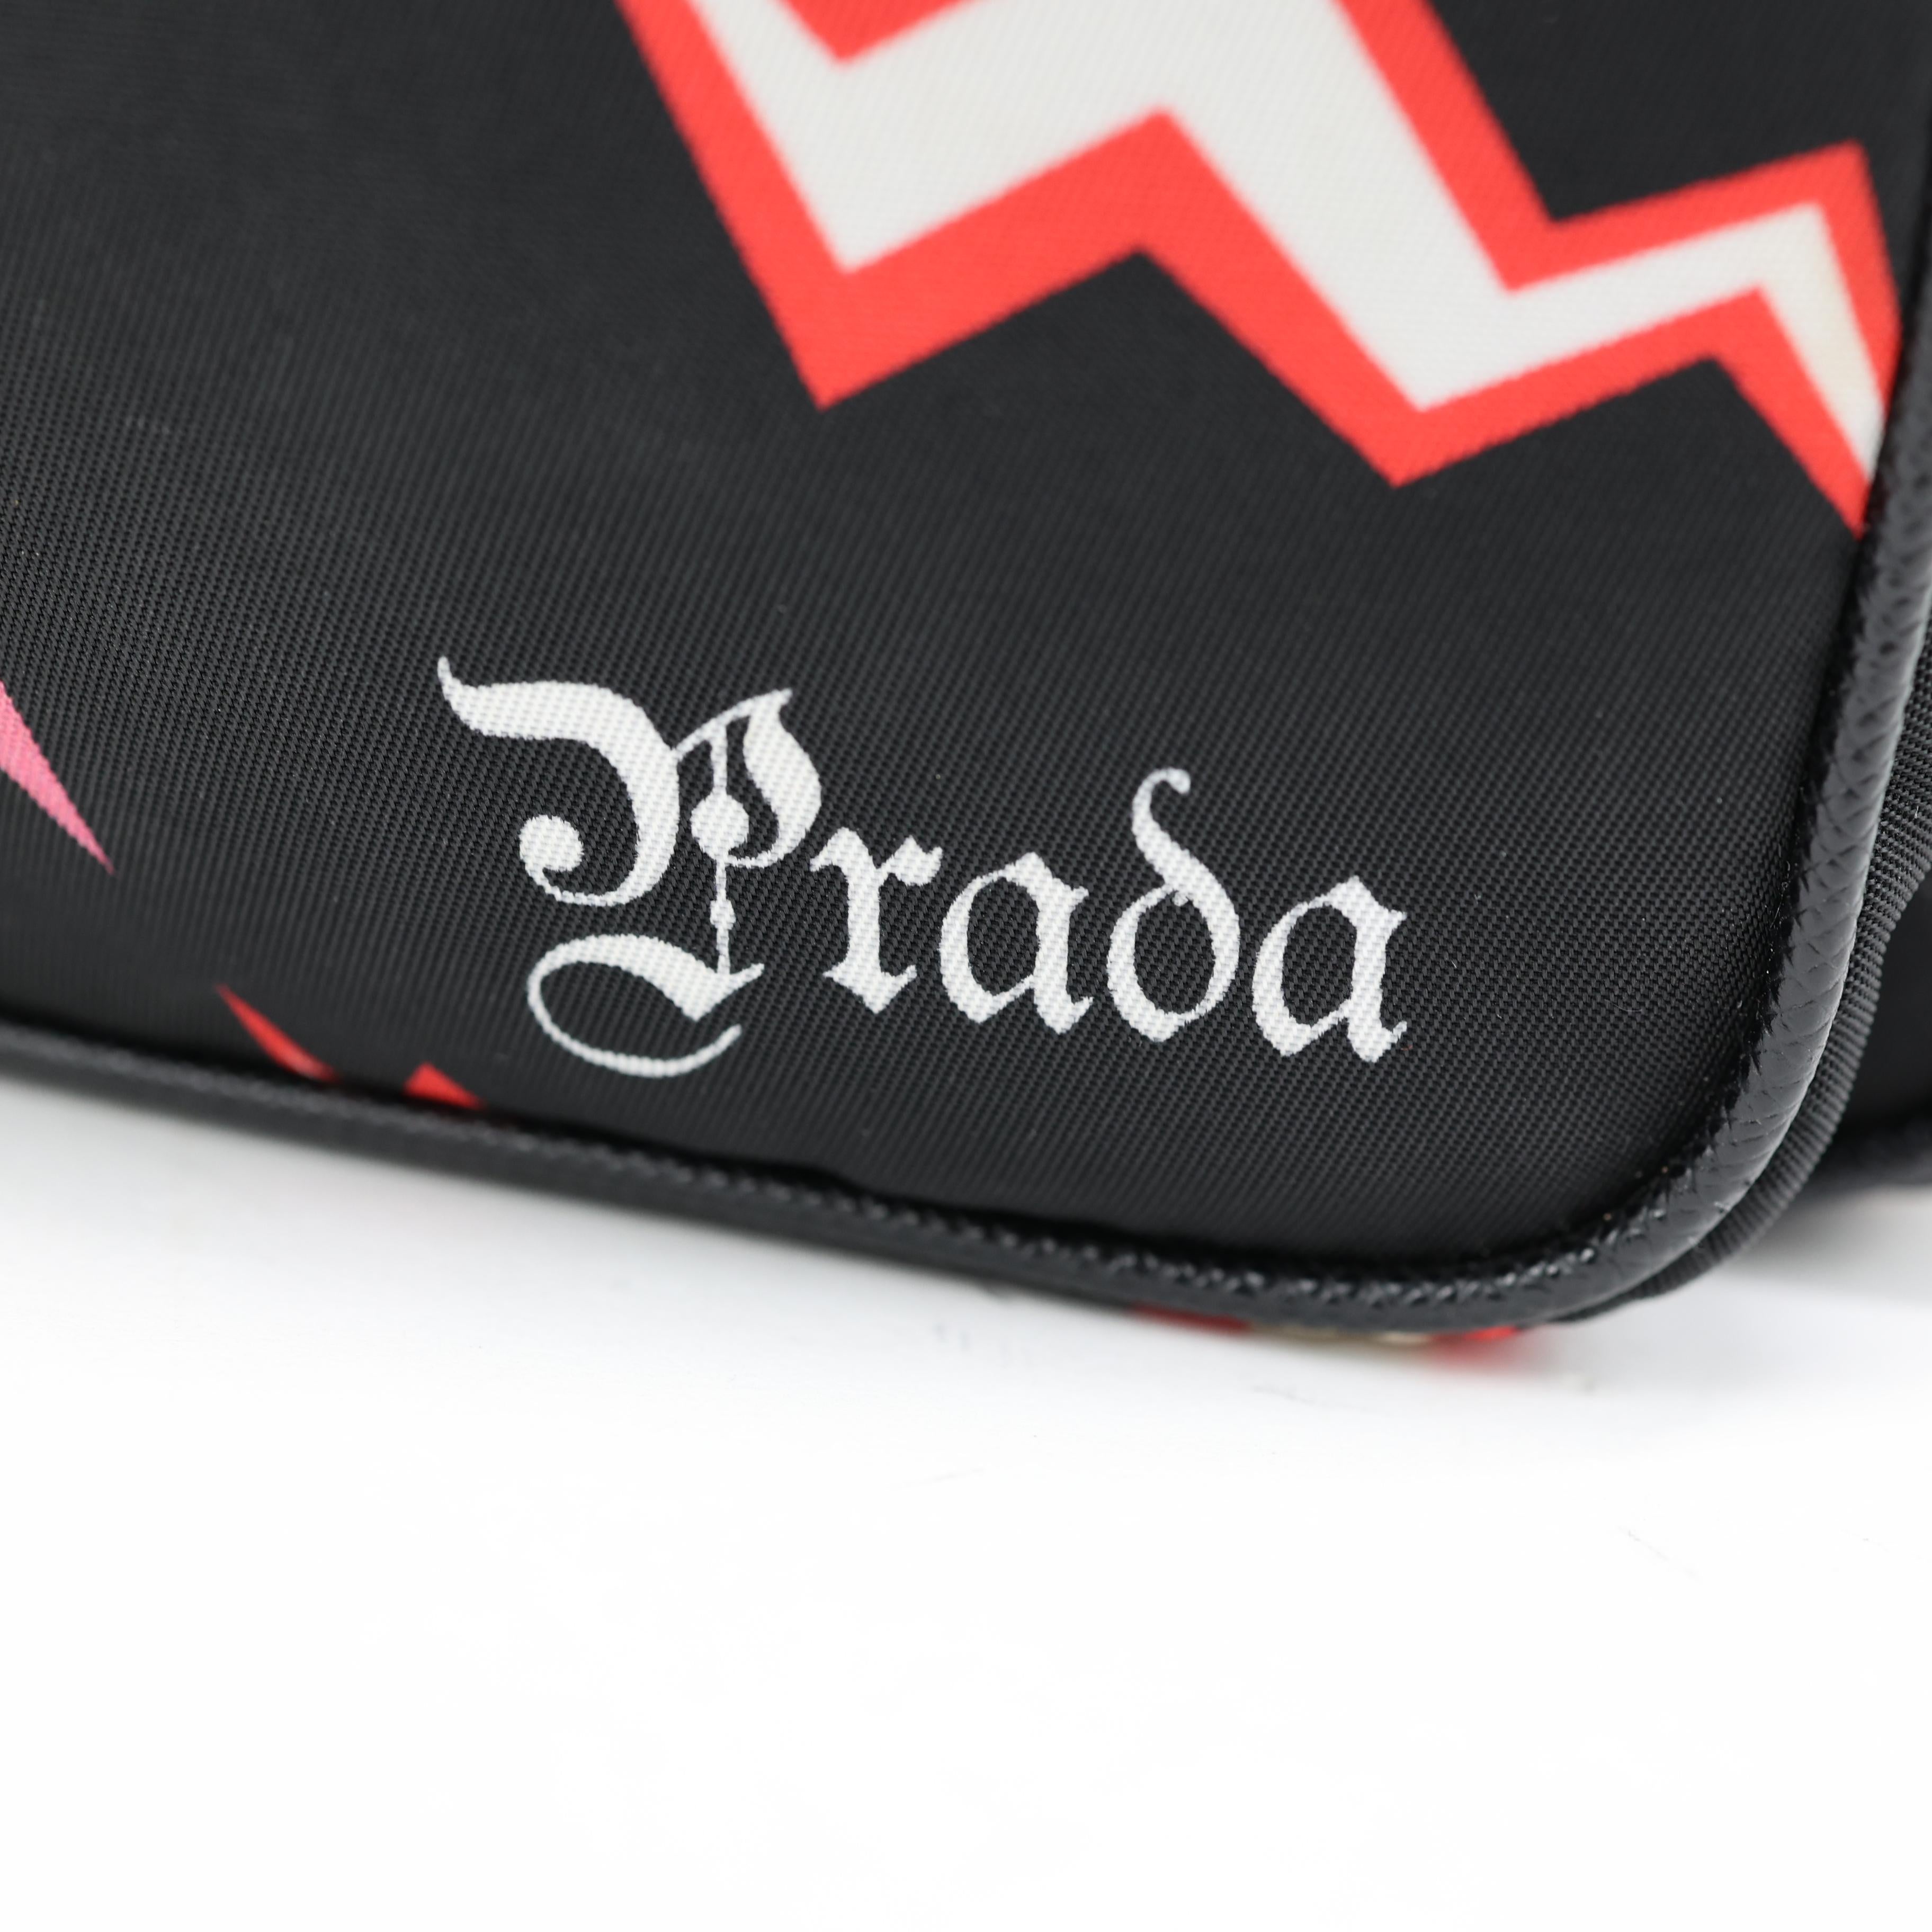 Prada Beltbag limited edition 4